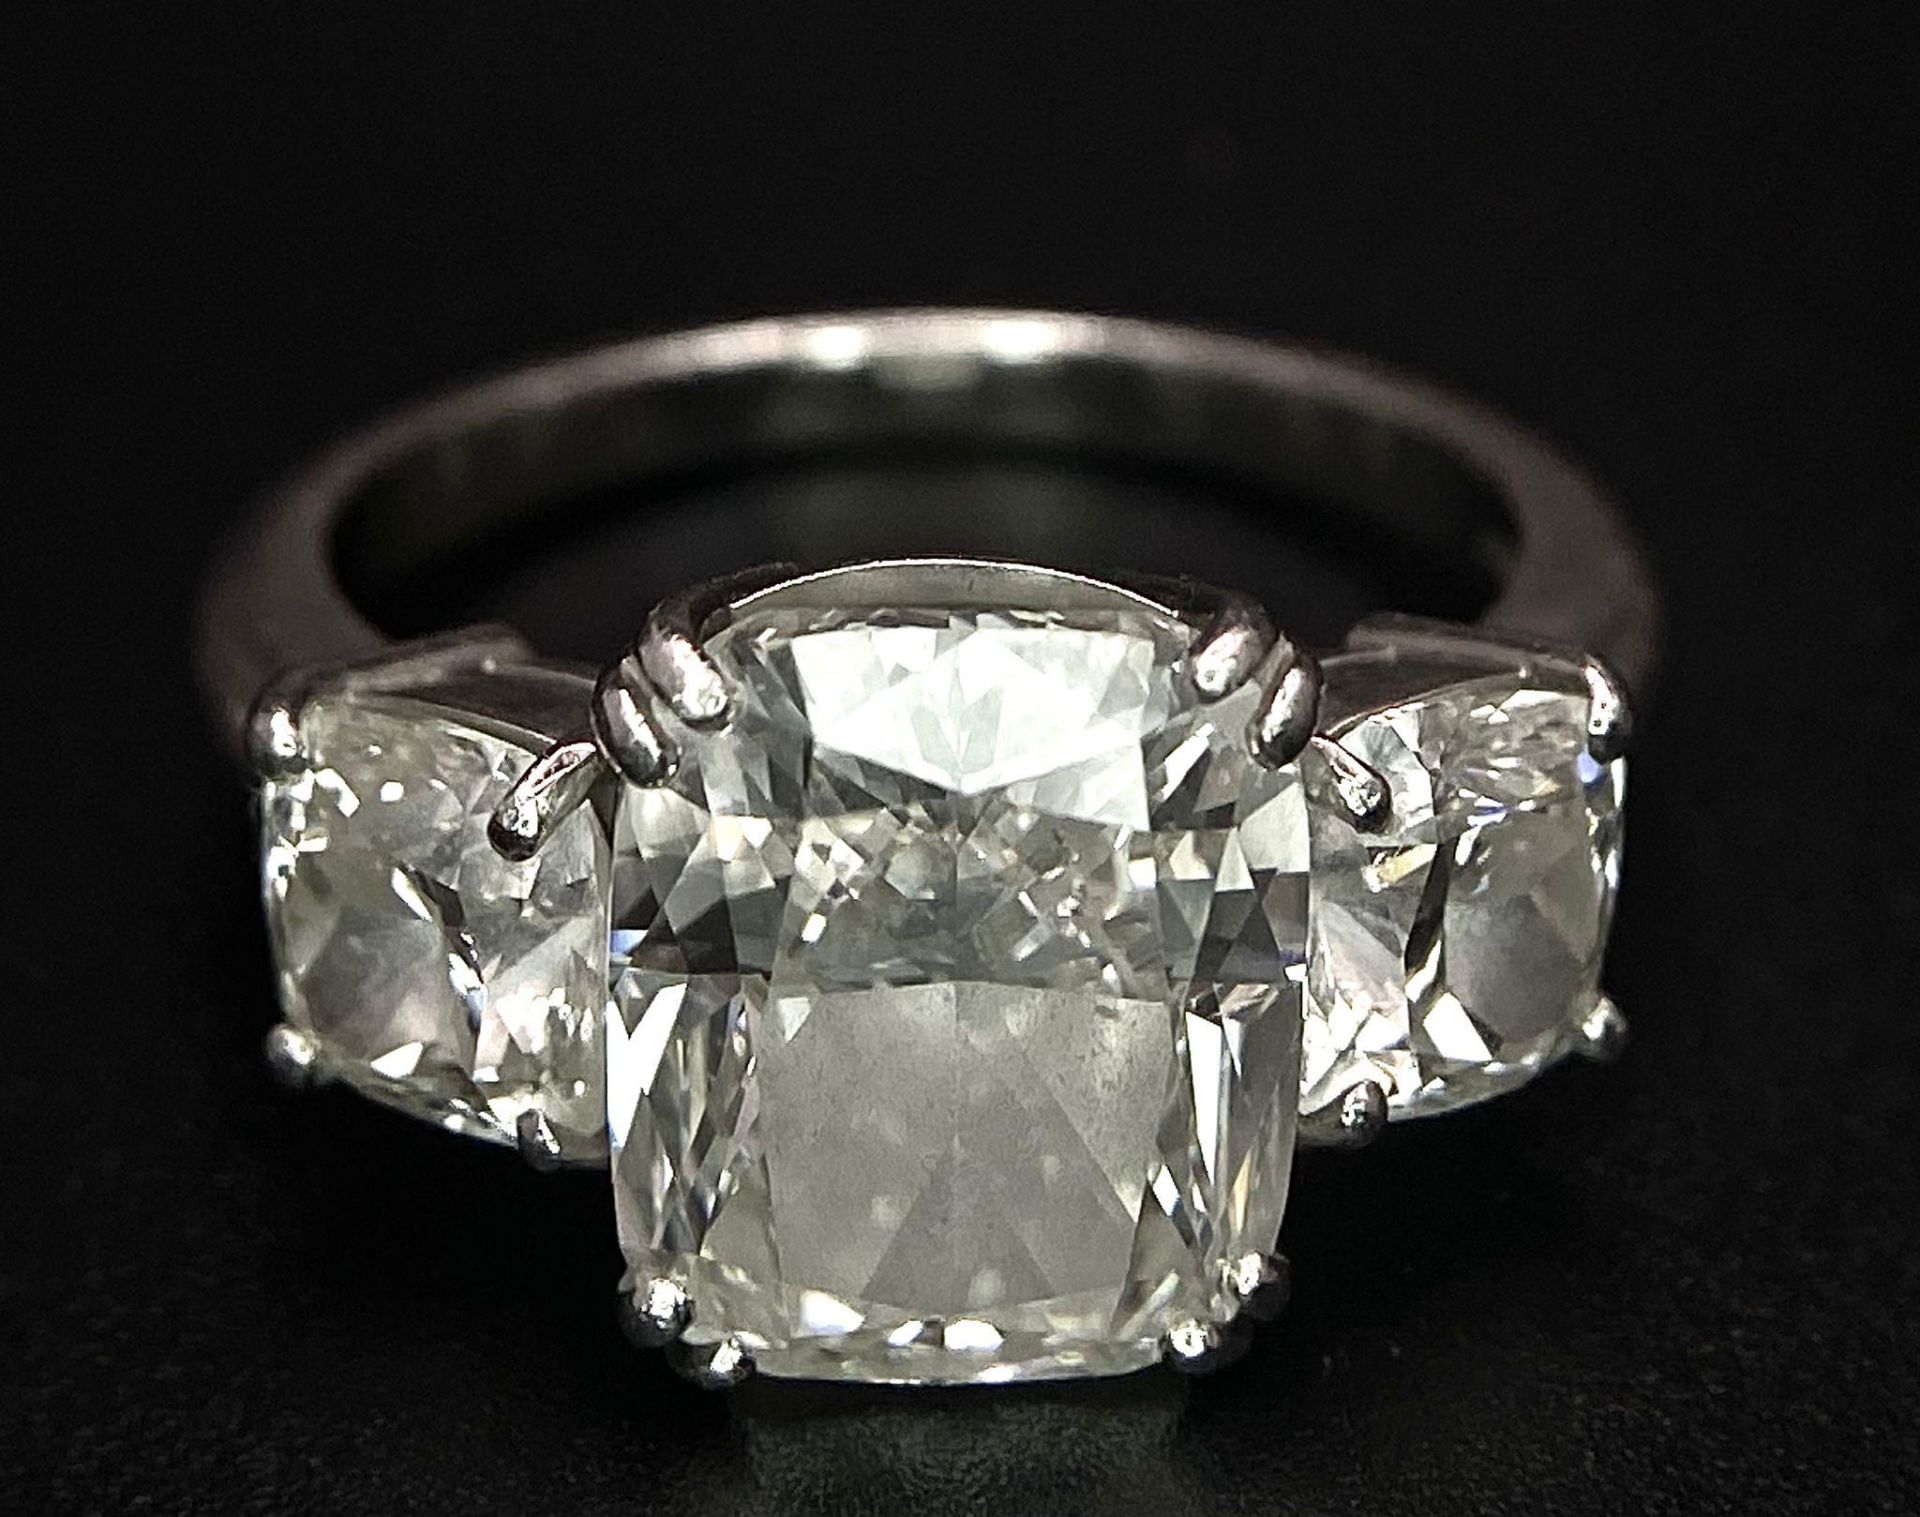 A Breathtaking 4.01ct GIA Certified Diamond Ring. A brilliant cushion cut 4.01ct central diamond